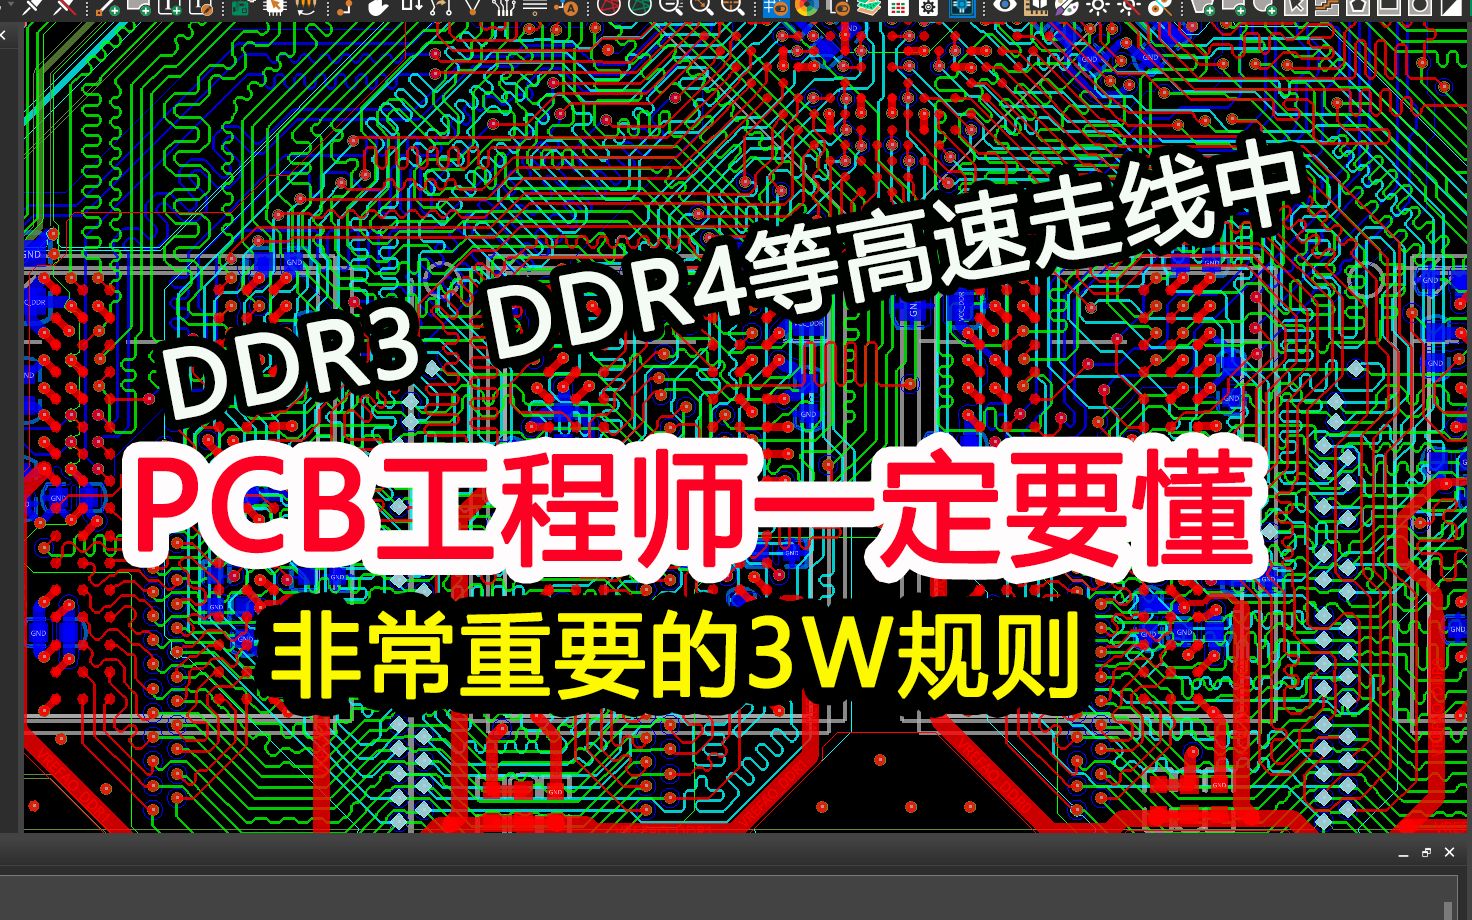 DDR4、DDR3等高速PCB设计中的3W规则-PCB设计工程师一定要懂的知识